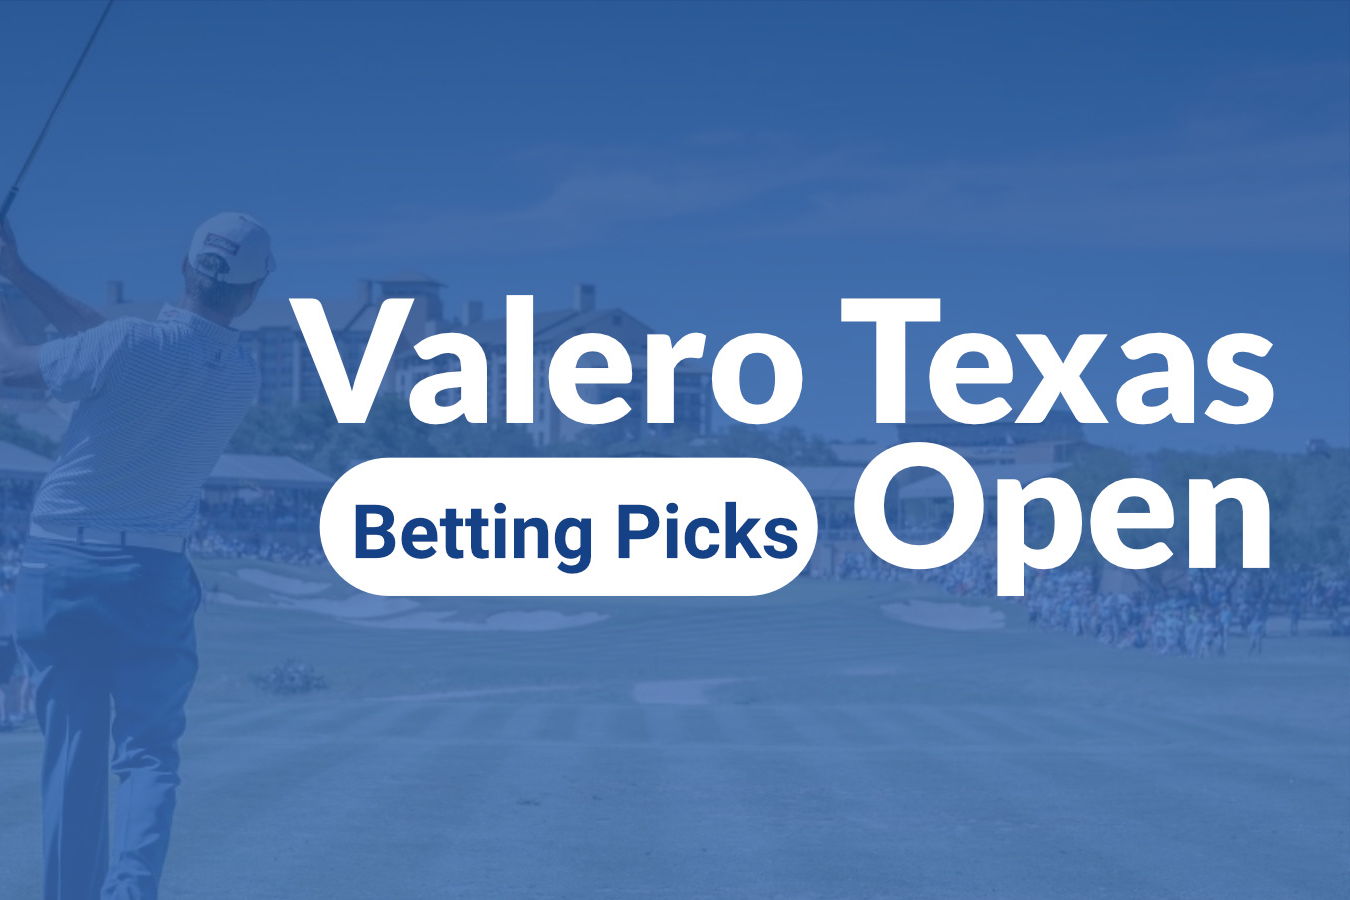 Valero Texas Open: Look Beyond The Favorites